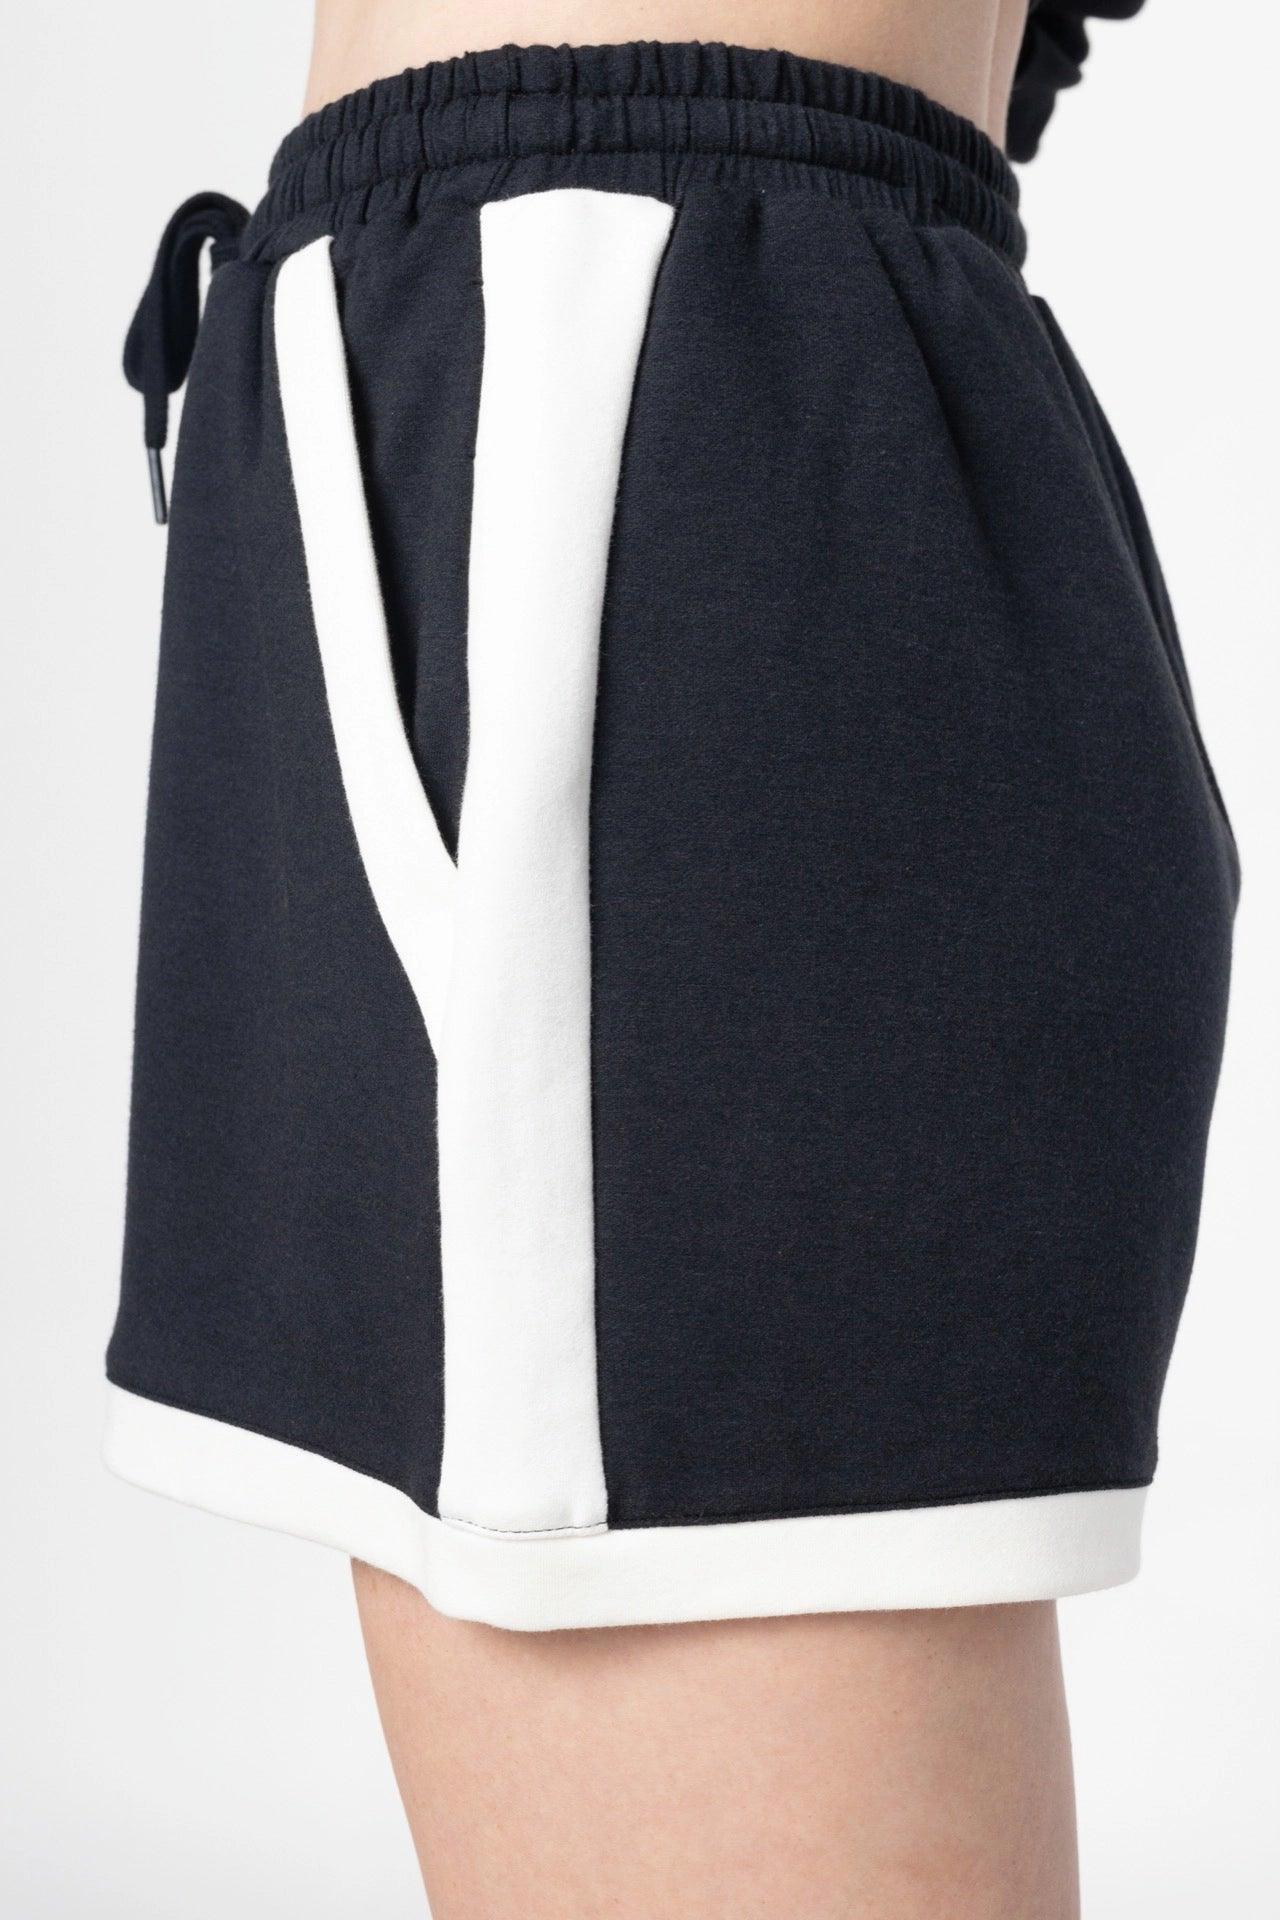 Women&#39;s Bonding Block Color Shorts - NOT LABELED